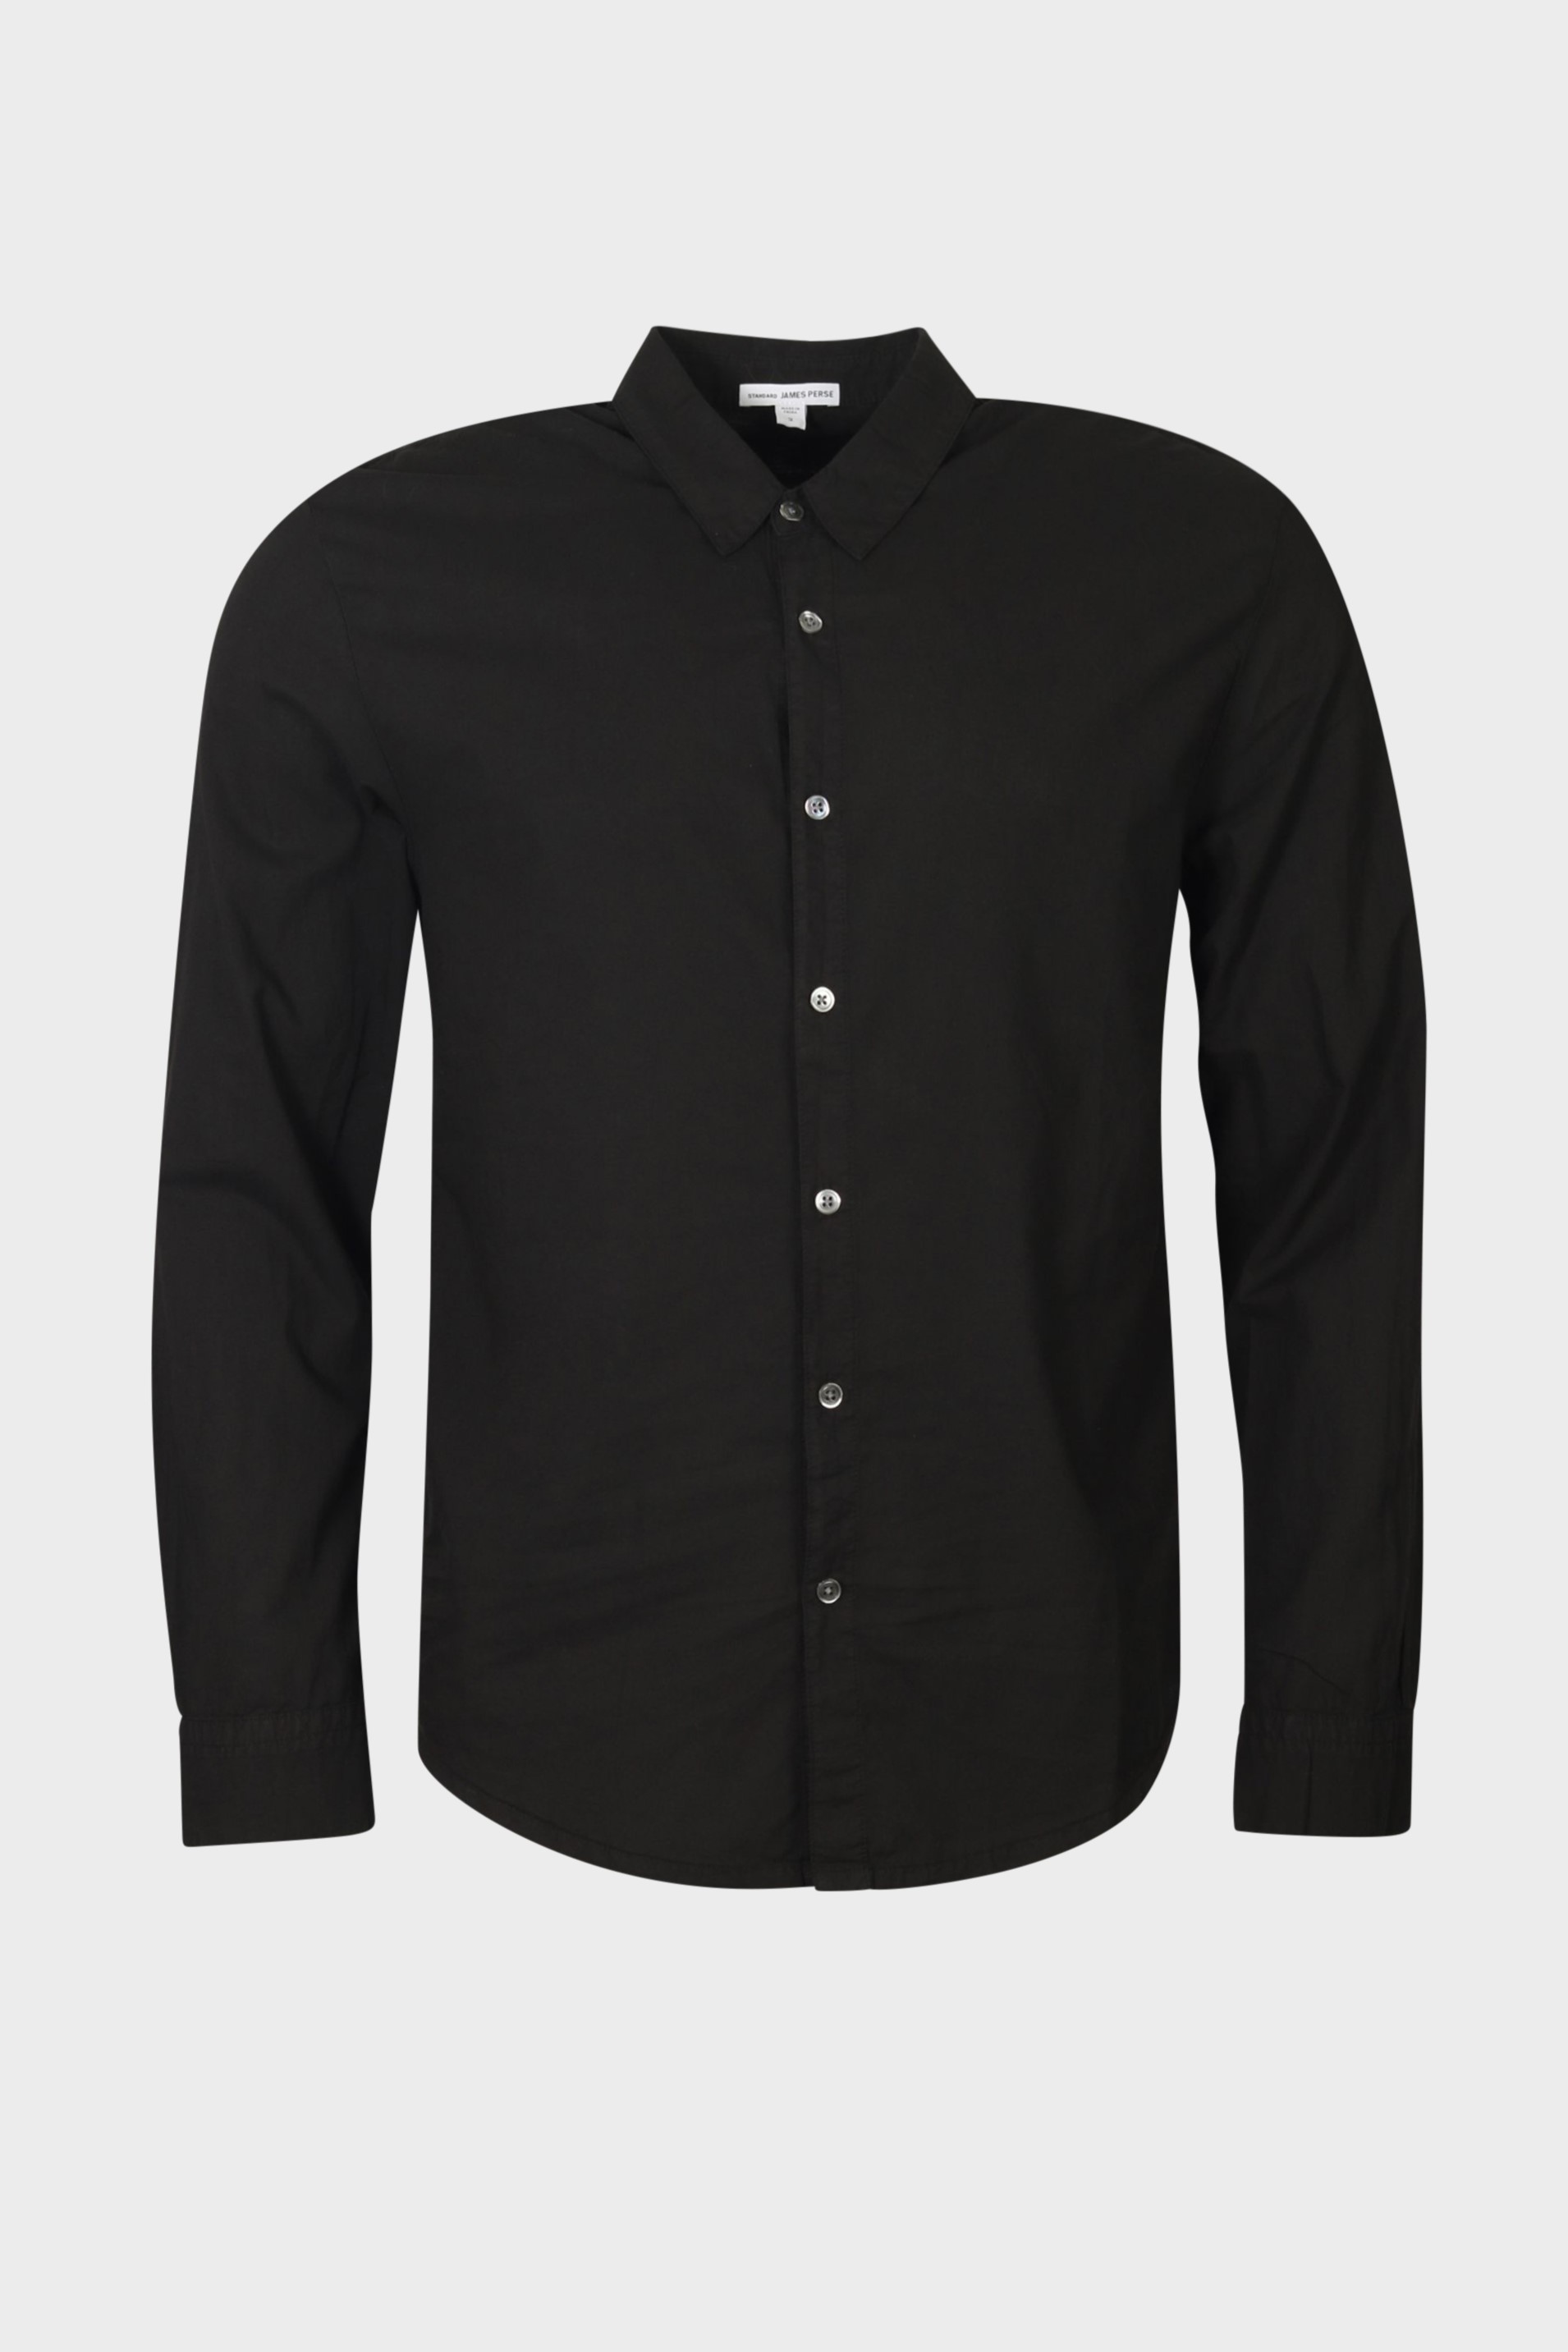 JAMES PERSE Standard Shirt in Black